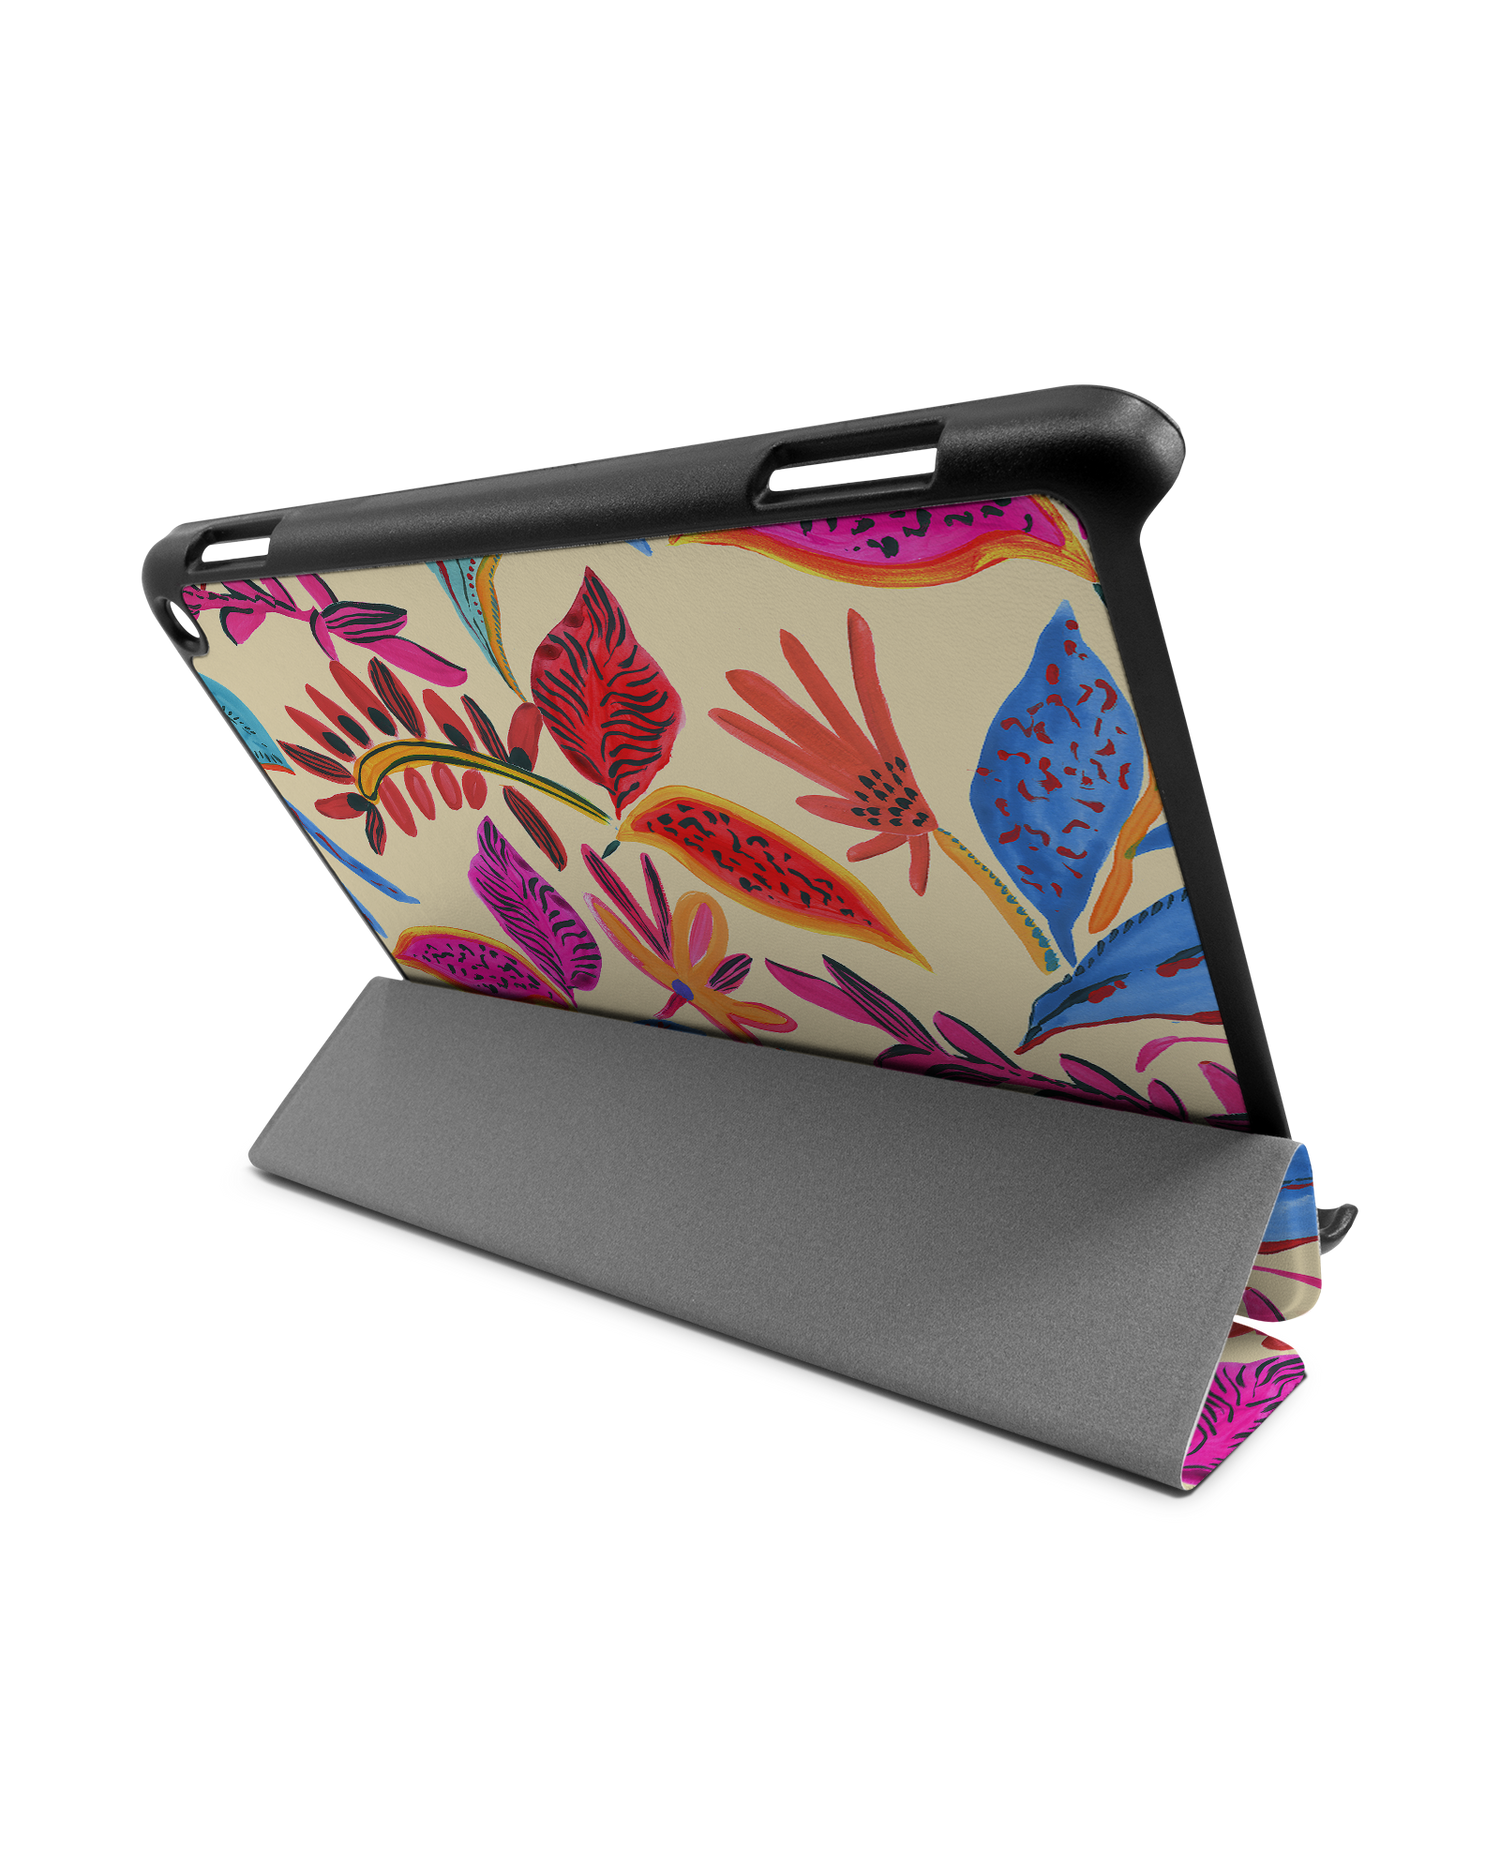 Painterly Spring Leaves Tablet Smart Case für Amazon Fire HD 8 (2022), Amazon Fire HD 8 Plus (2022), Amazon Fire HD 8 (2020), Amazon Fire HD 8 Plus (2020): Aufgestellt im Querformat